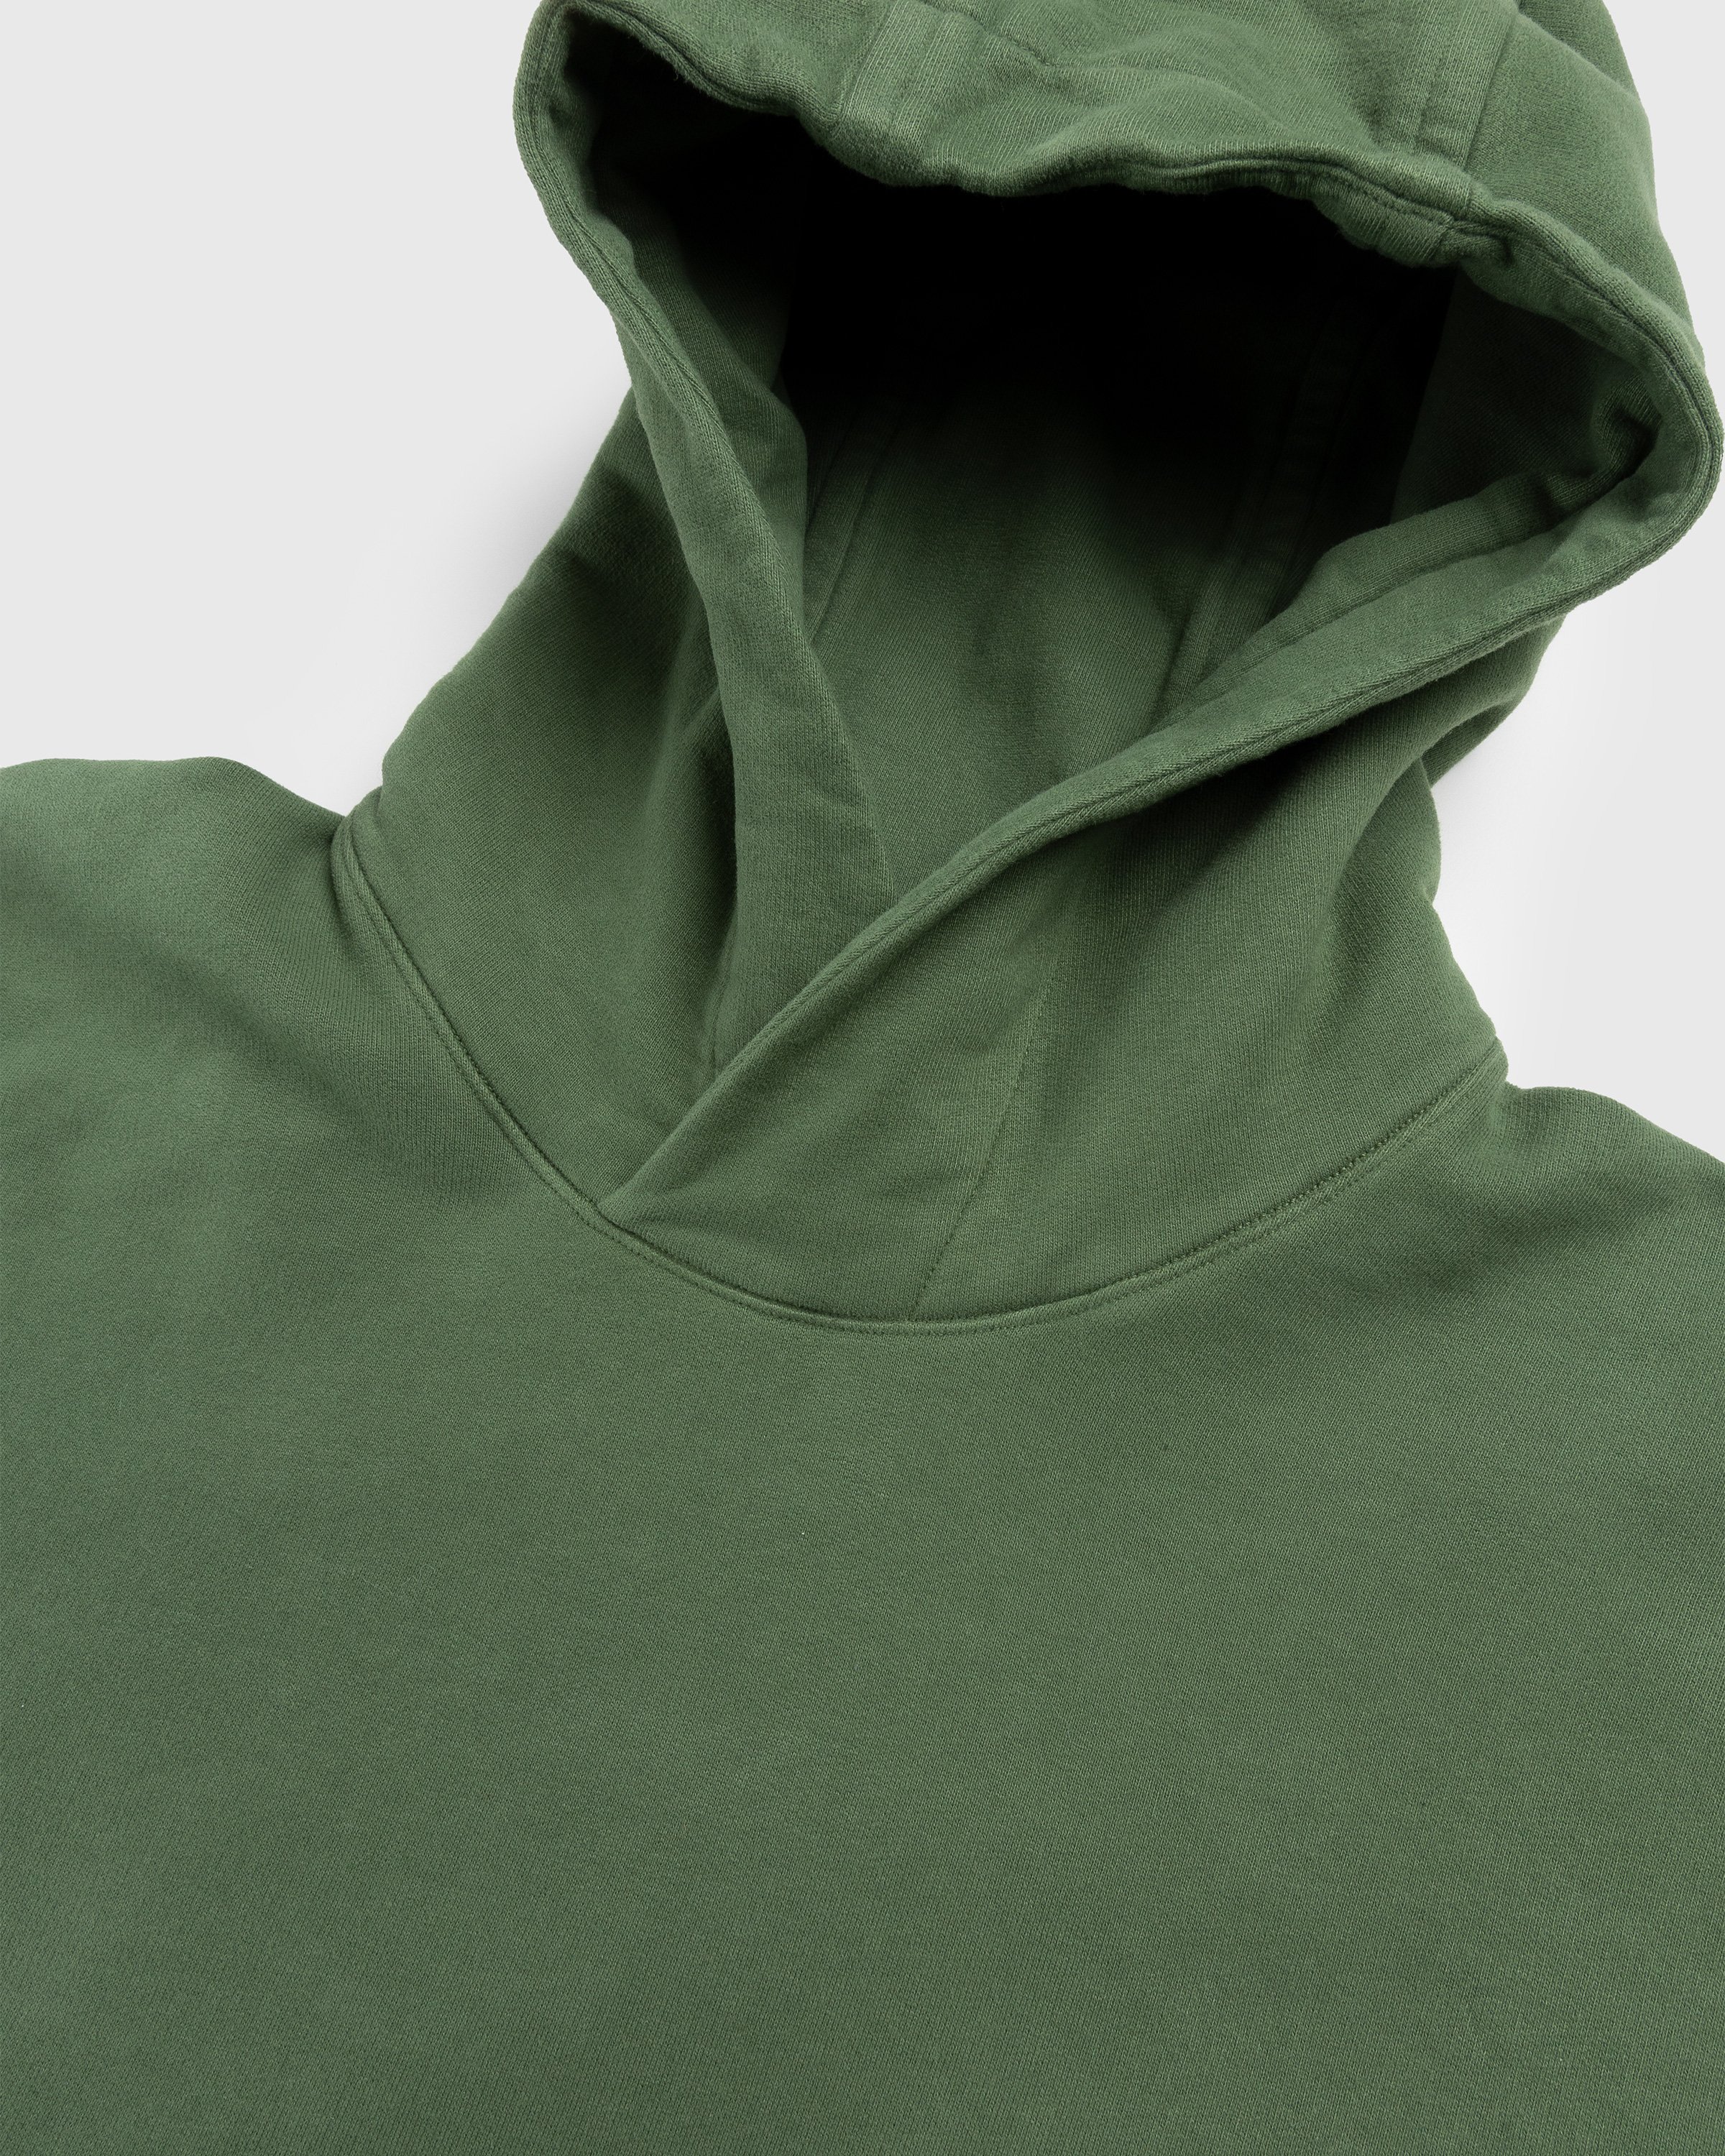 Stone Island - Garment-Dyed Fleece Hoodie Olive - Clothing - Green - Image 3